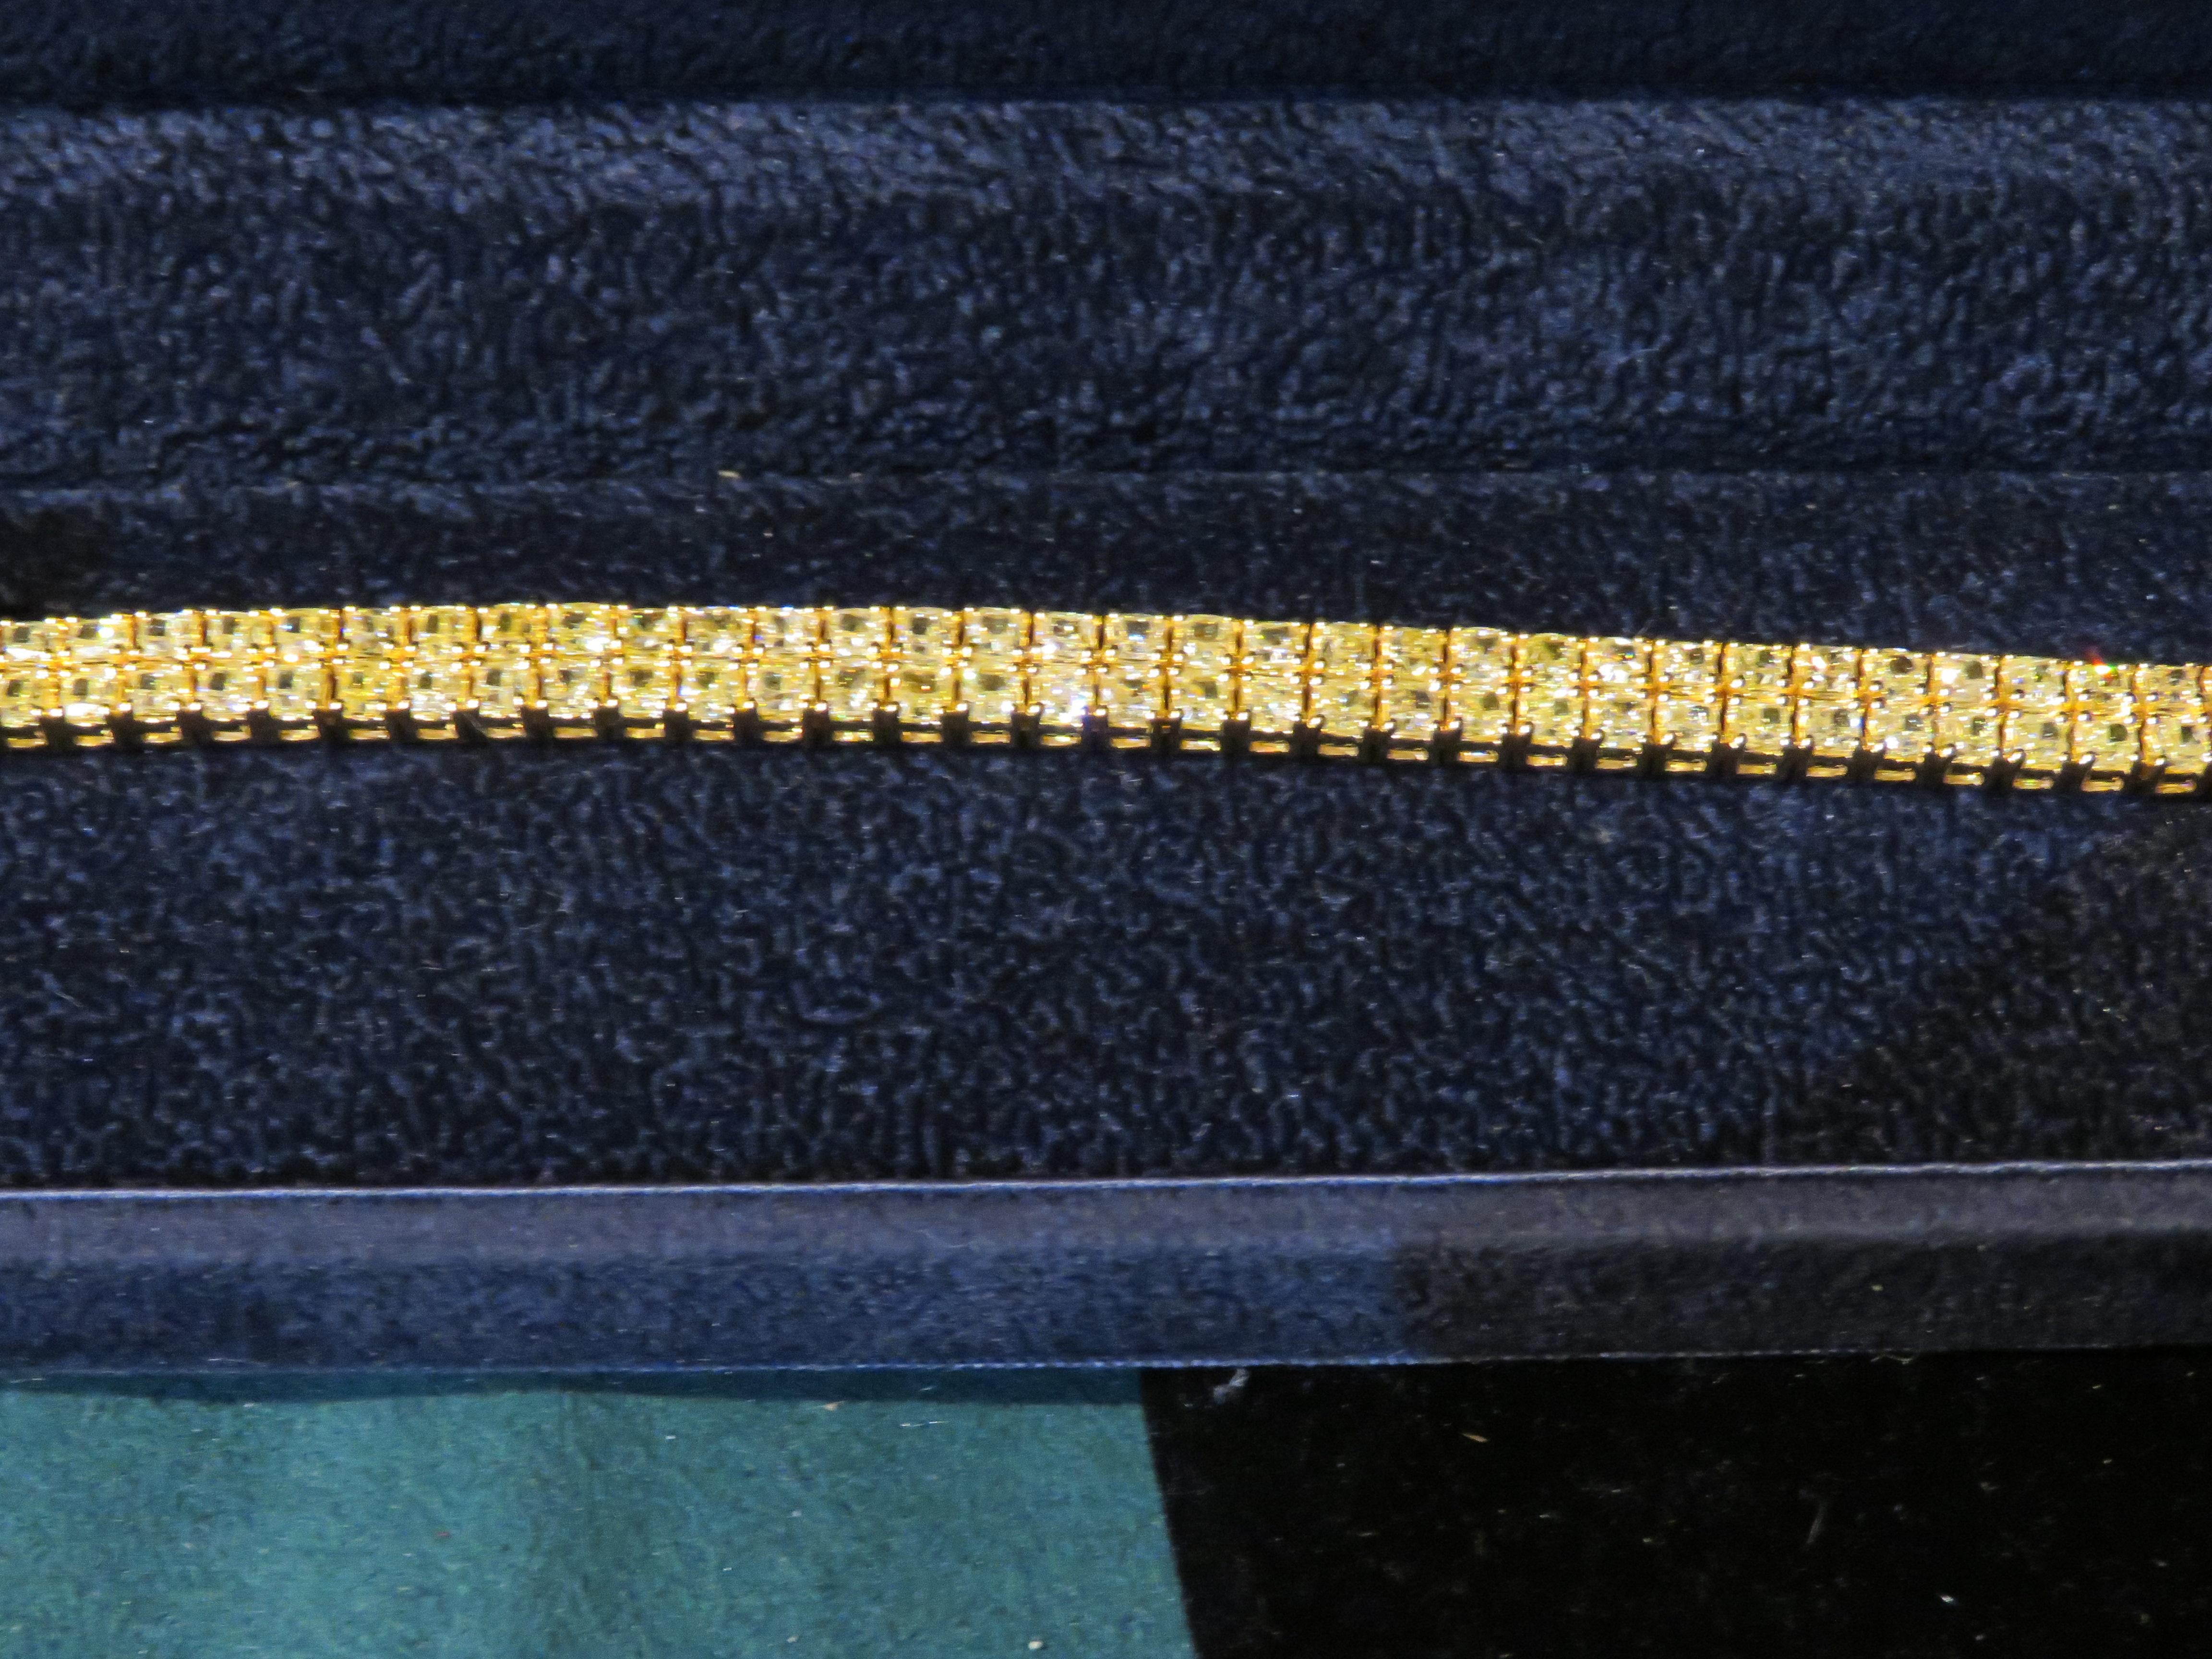 Mixed Cut Nwt $77, 594 Rare 18kt Gold Gorgeous 11CT Fancy Double Yellow Diamond Bracelet For Sale